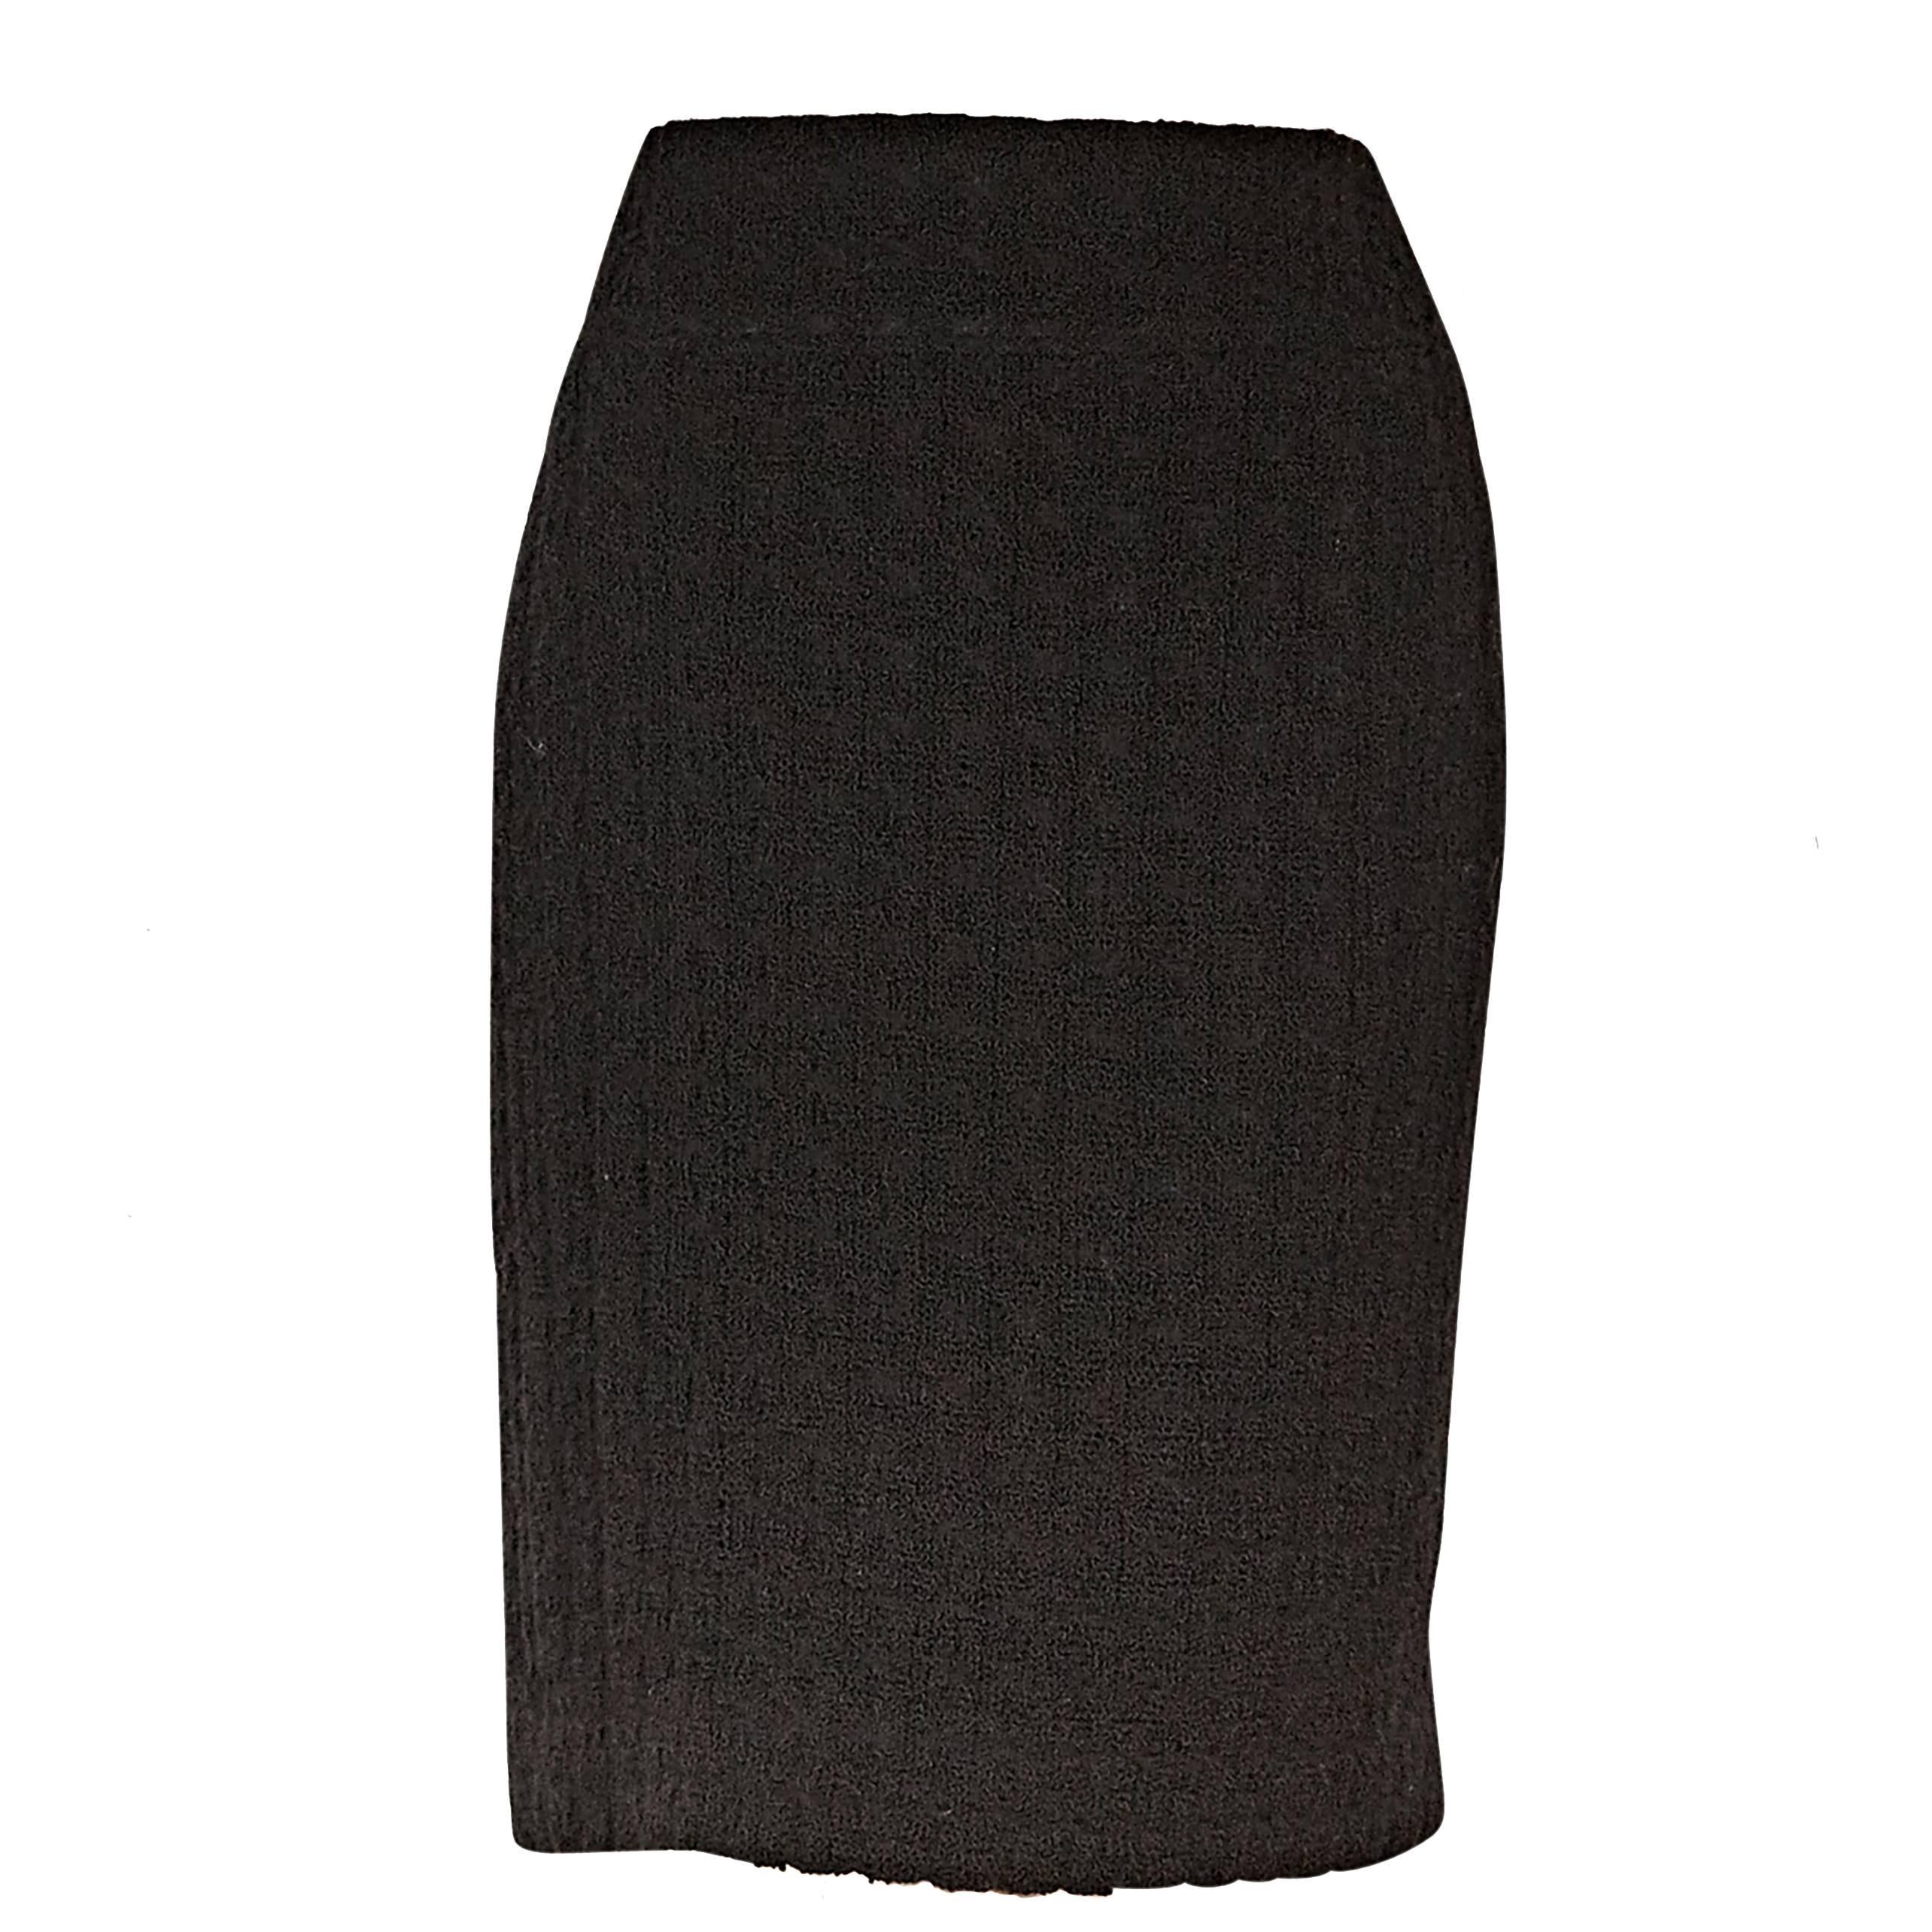 Black Chanel Wool Pencil Skirt